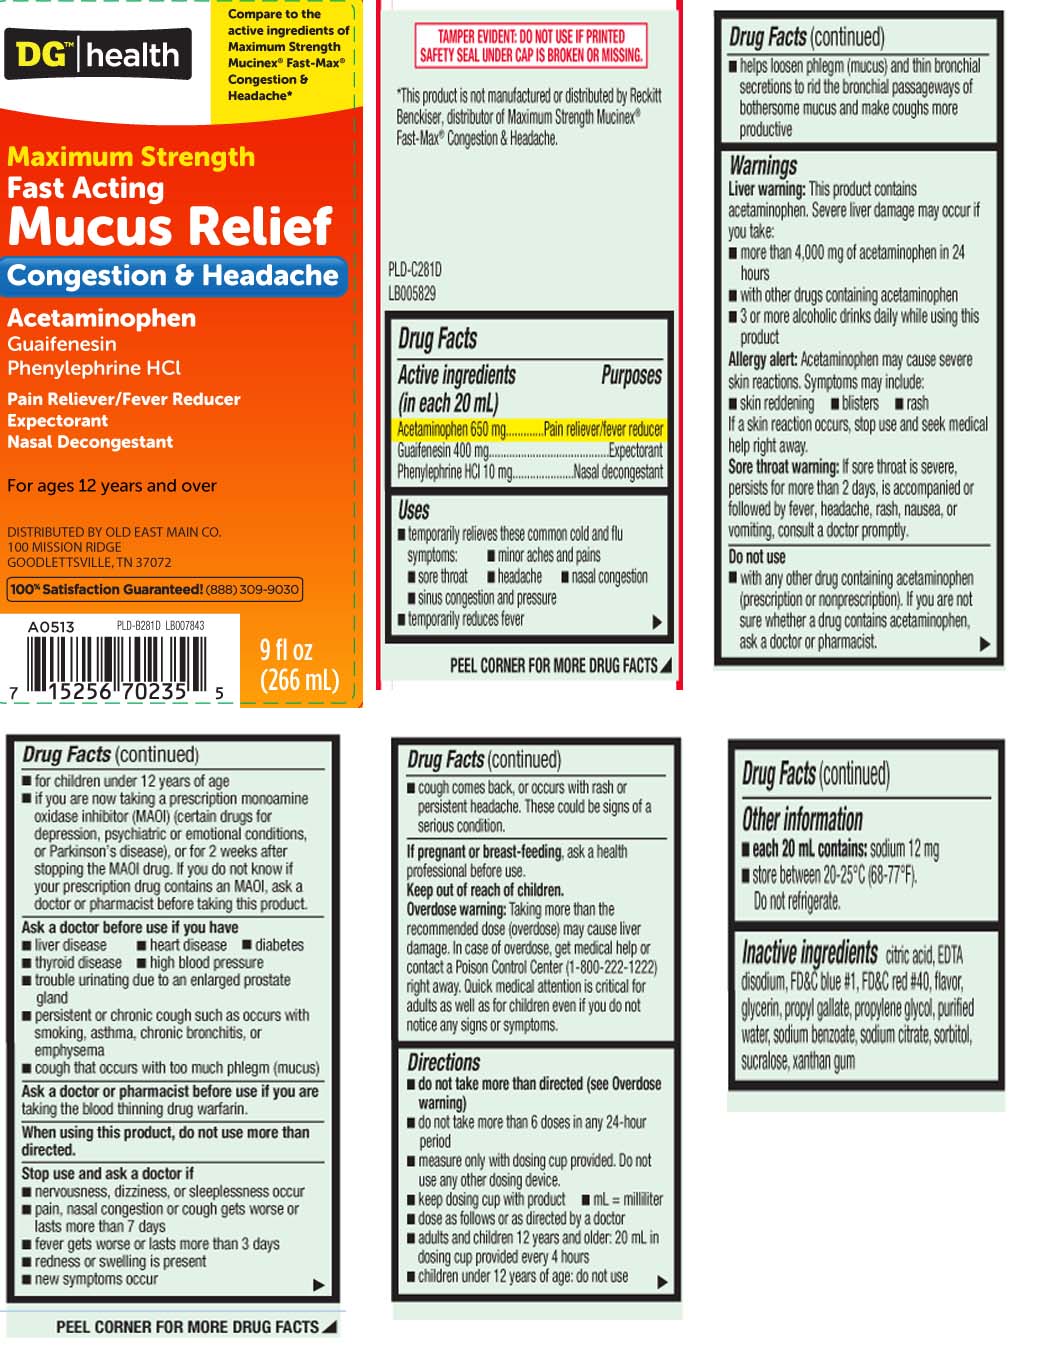 Acetaminophen 650 mg, Guaifenesin 400 mg, Phenylephrine HCl 10 mg